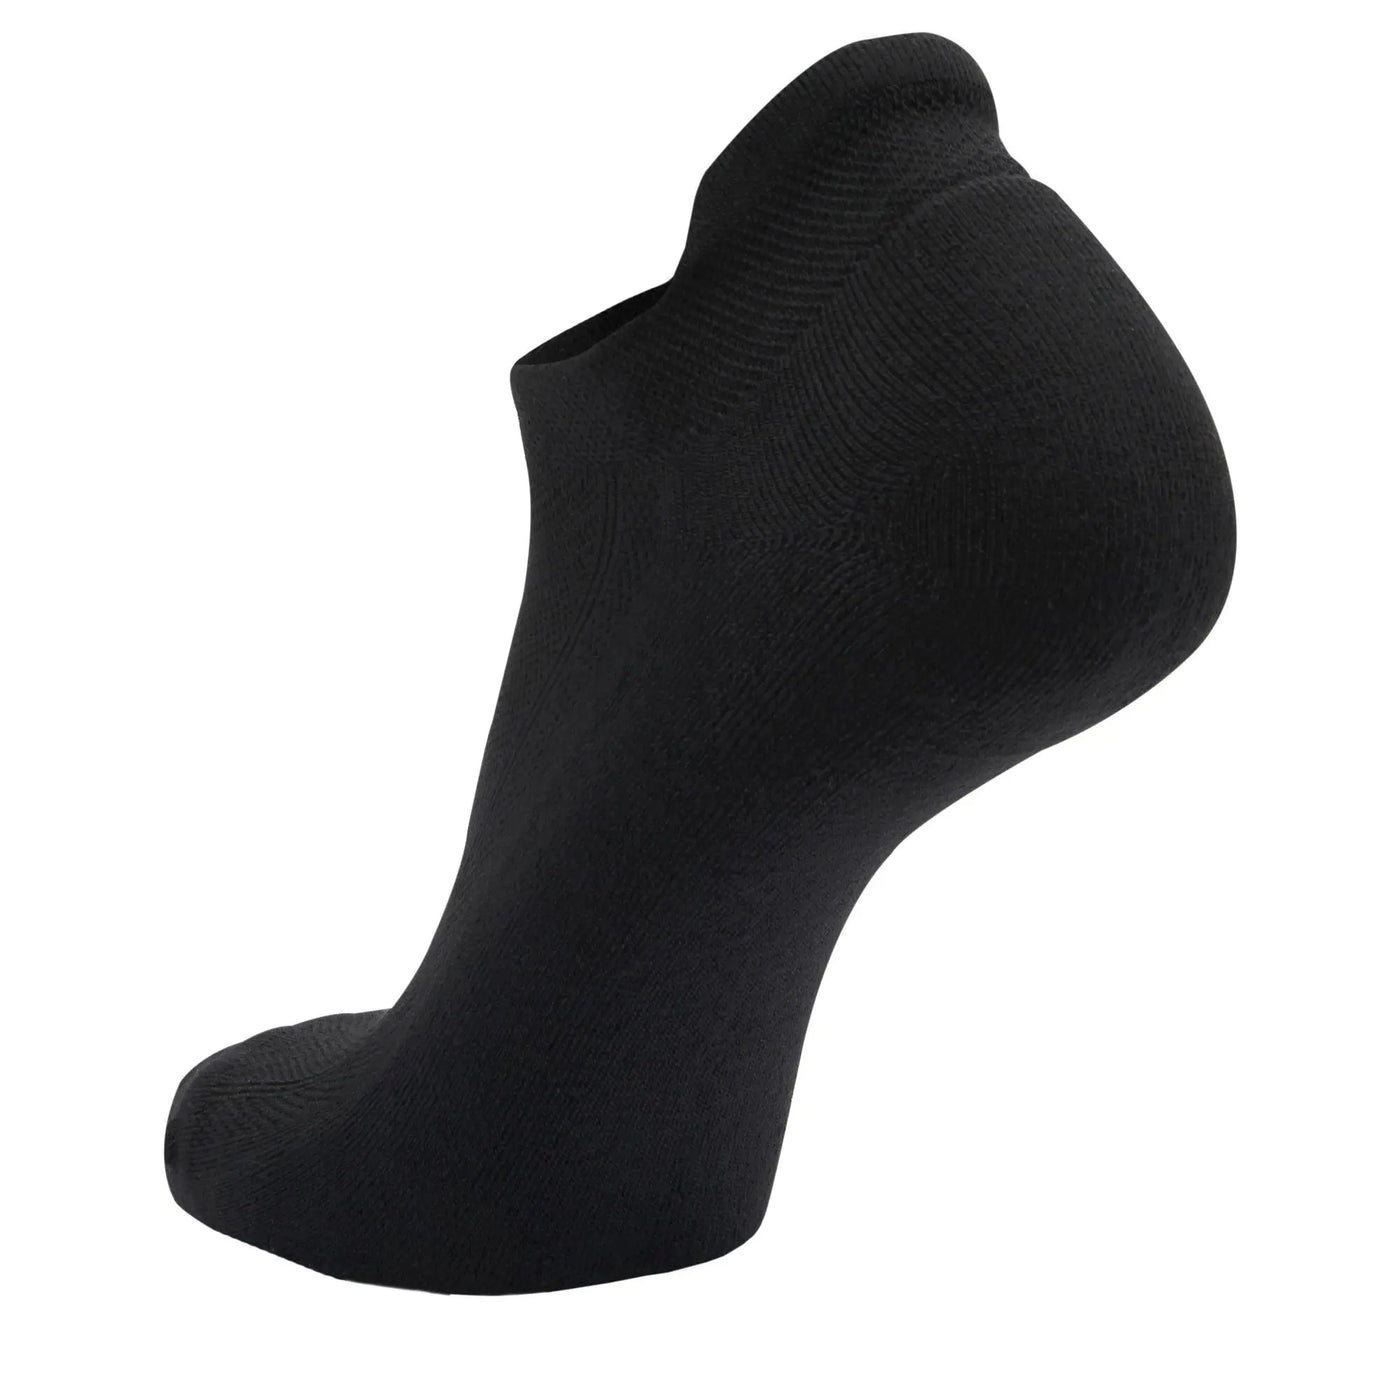 Balega Hidden Comfort No Show Socks - BALE-8025-0300